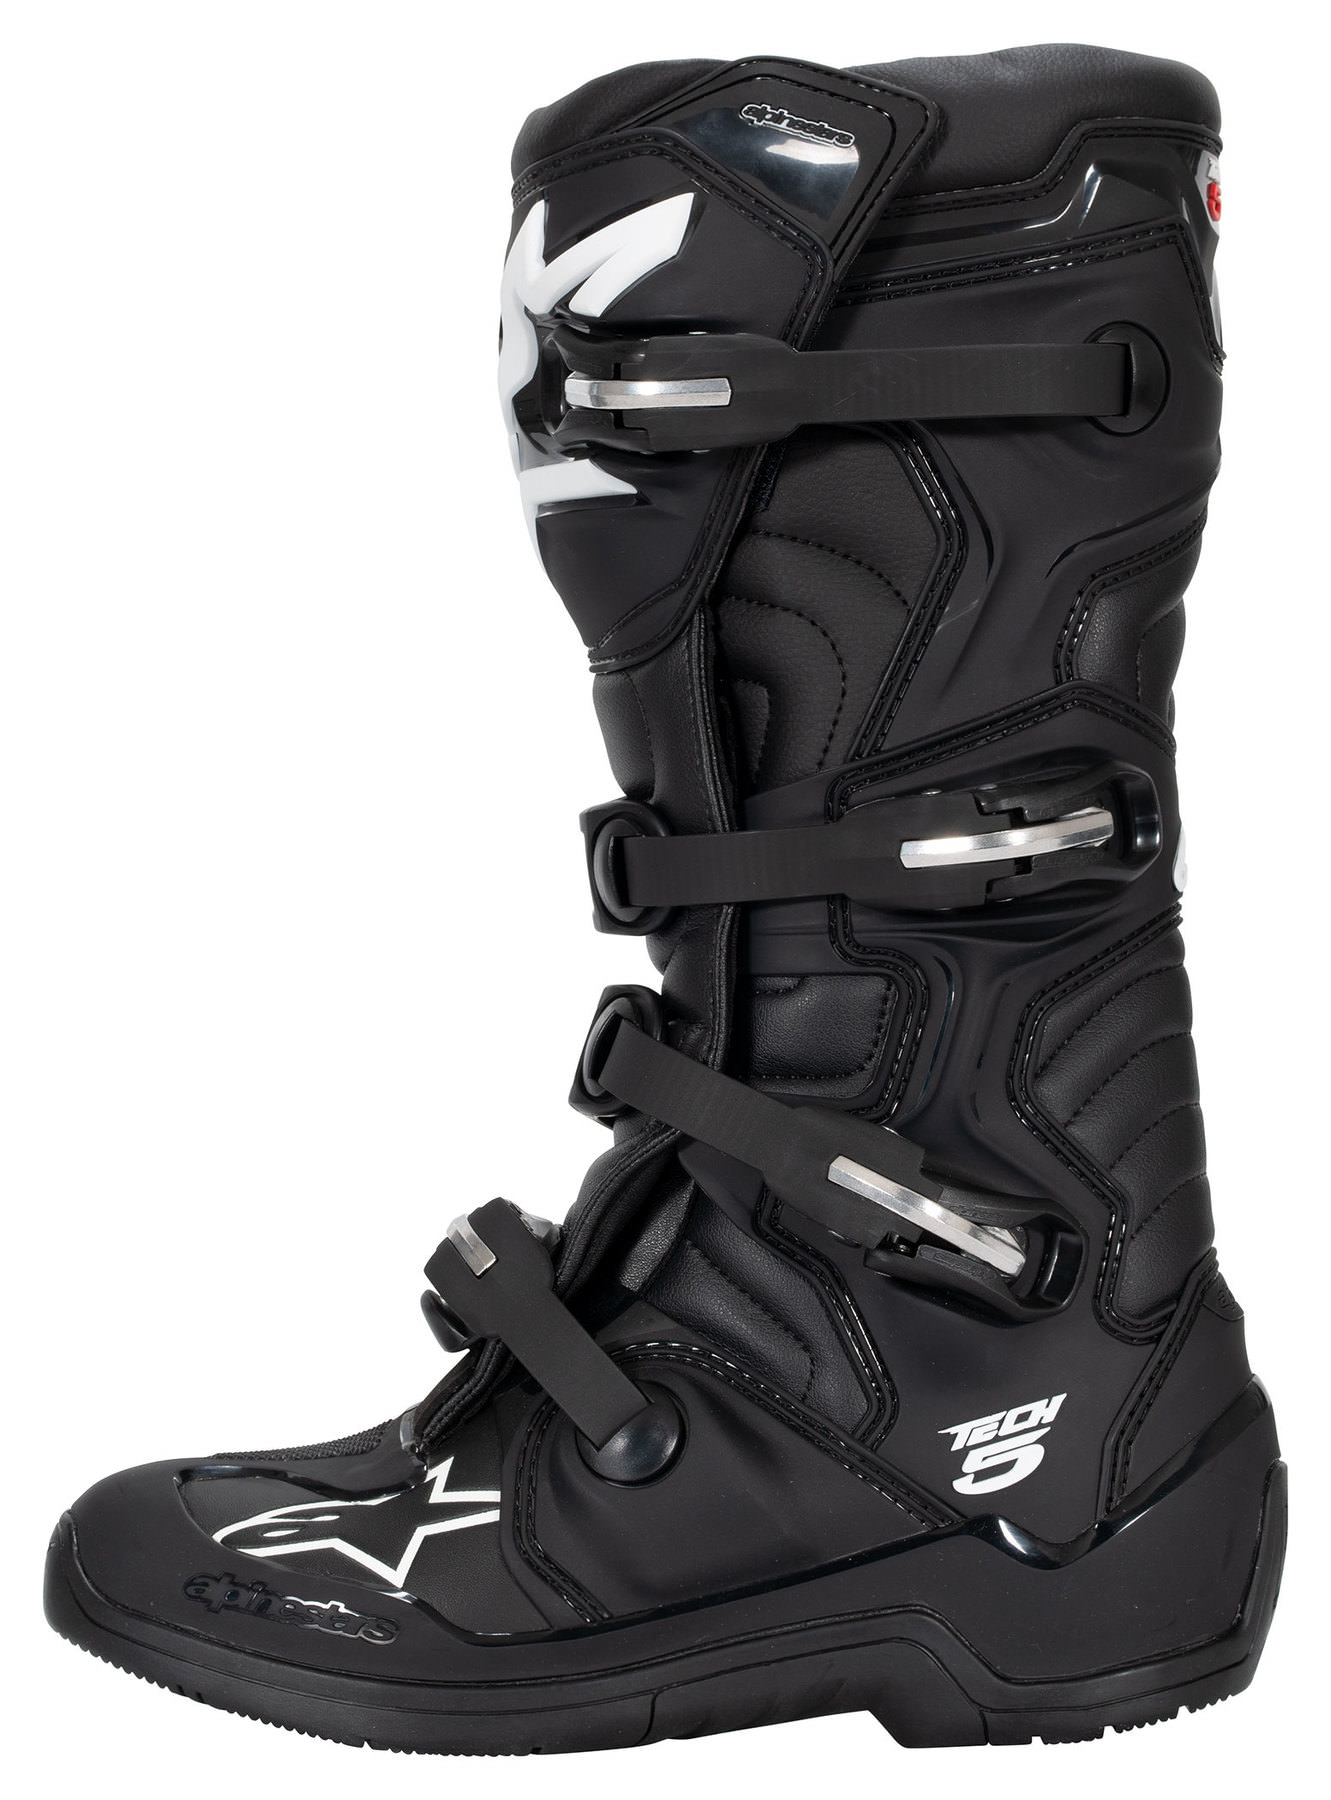 Buy Alpinestars Tech 5 Cross Boots 